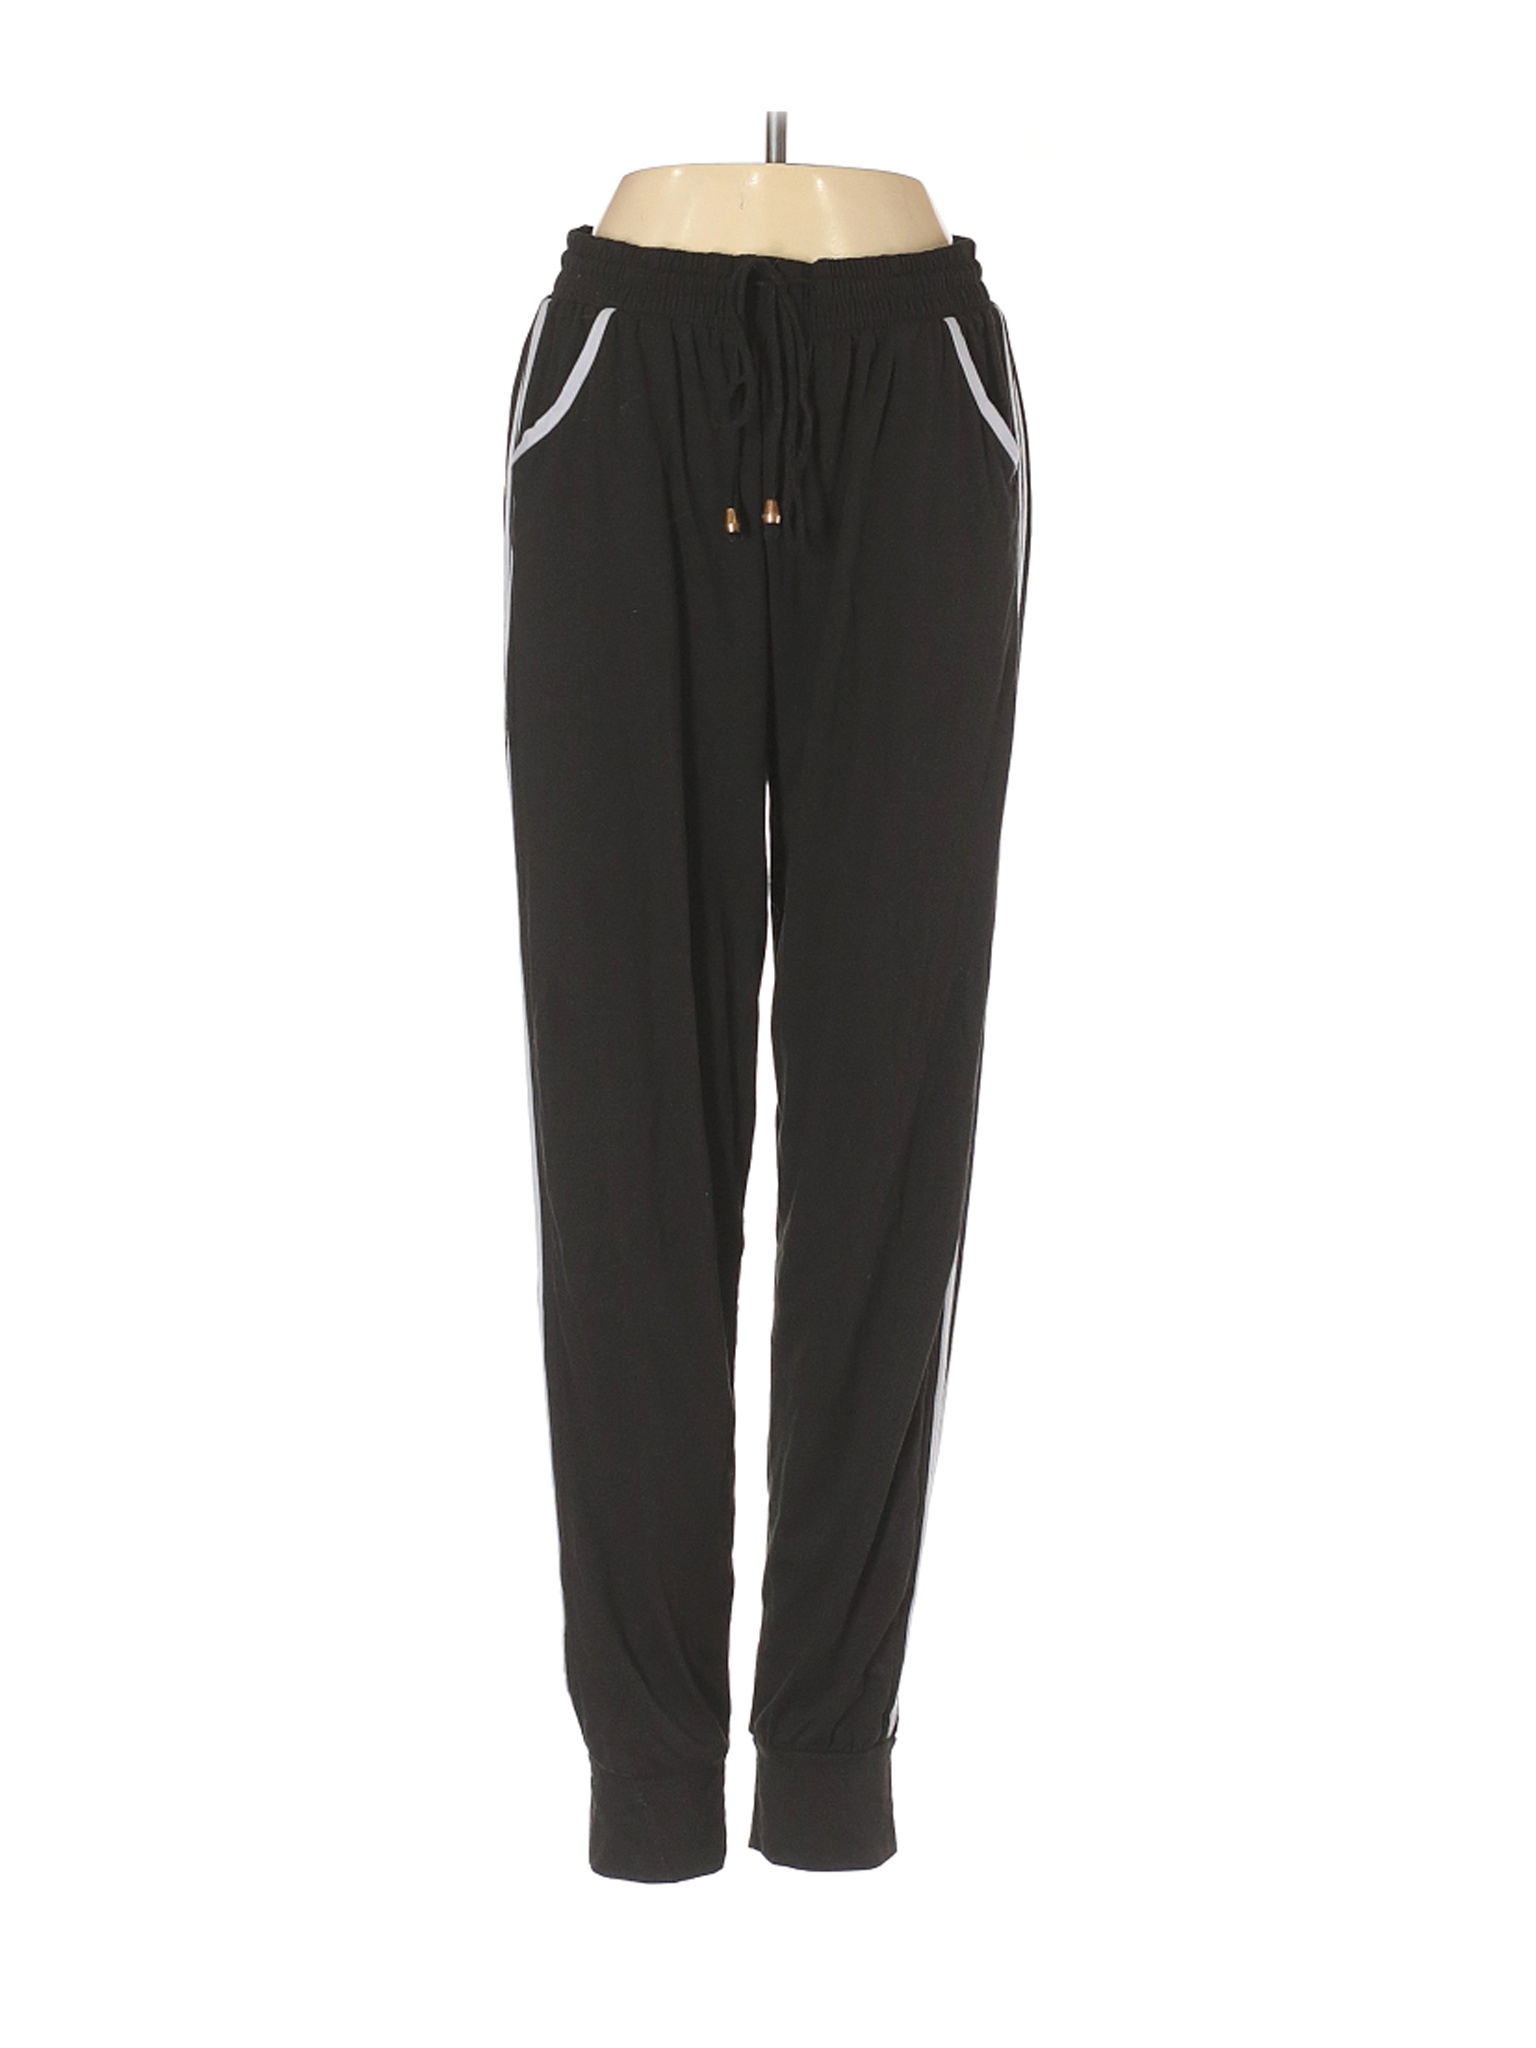 INDERO Women Black Casual Pants S | eBay